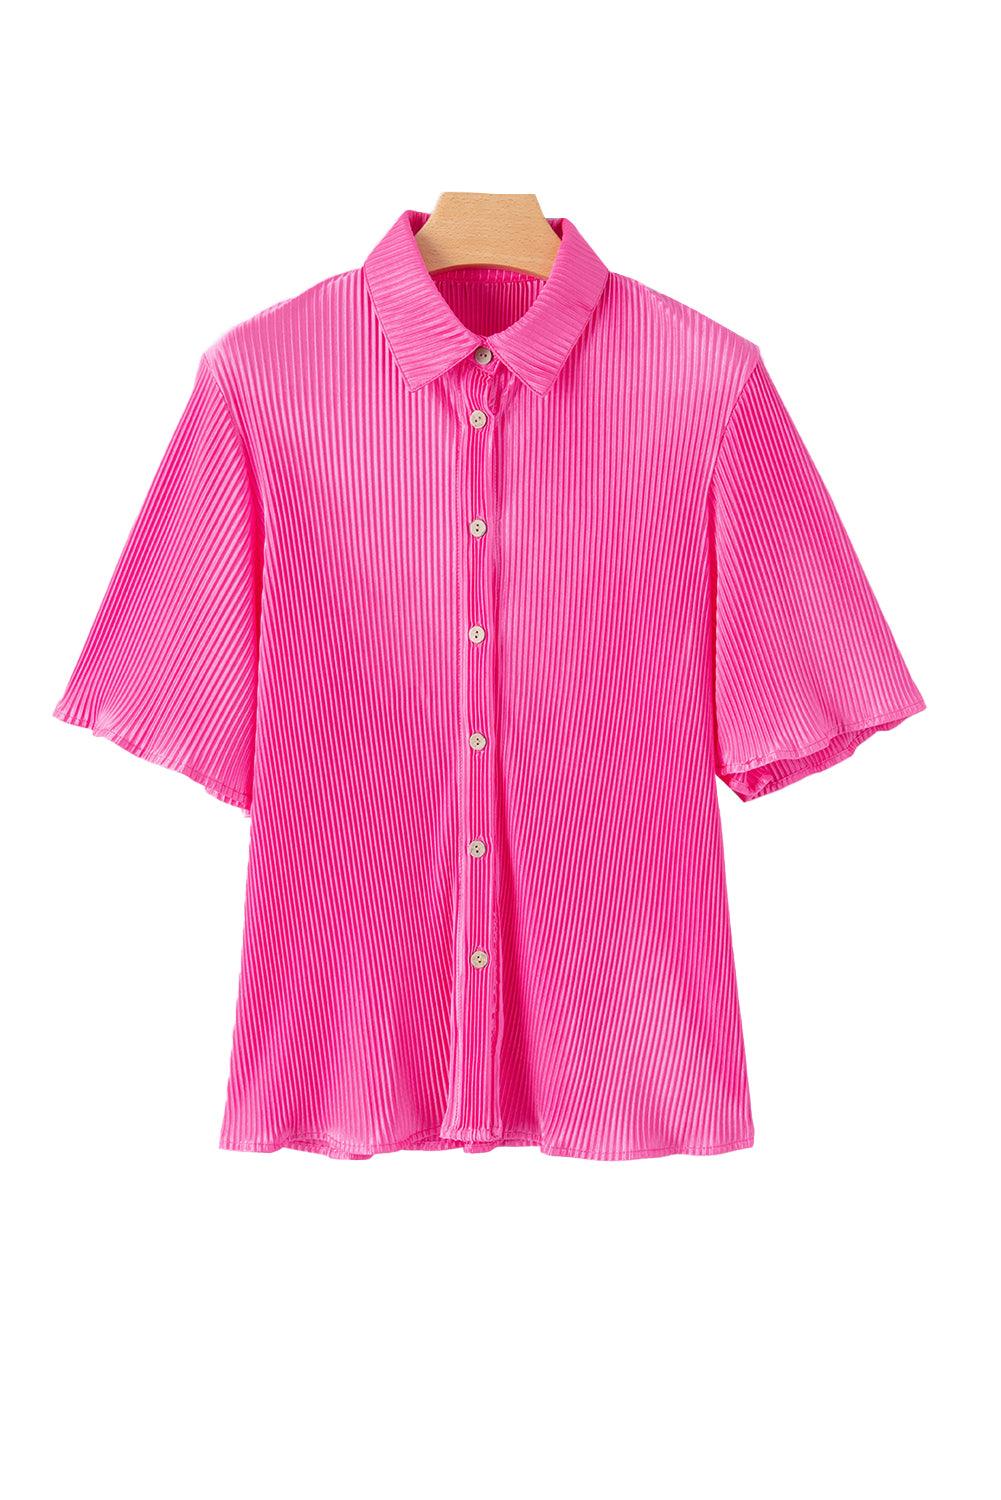 Bright Pink Satin Pleated Short Sleeve Shirt - L & M Kee, LLC